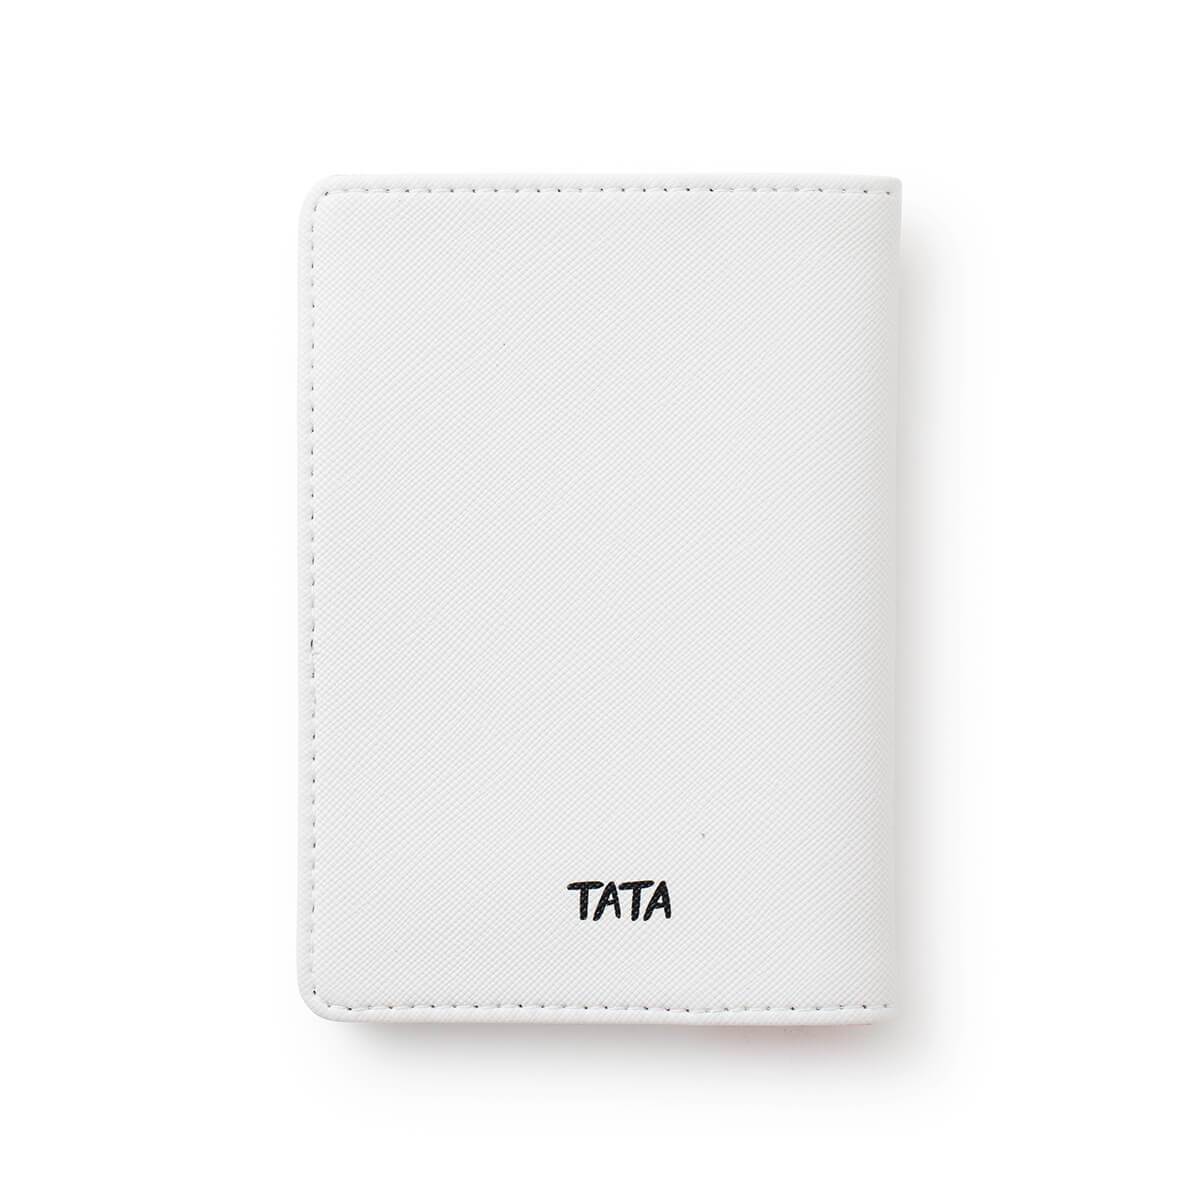 BT21 TATA Music Passport Case